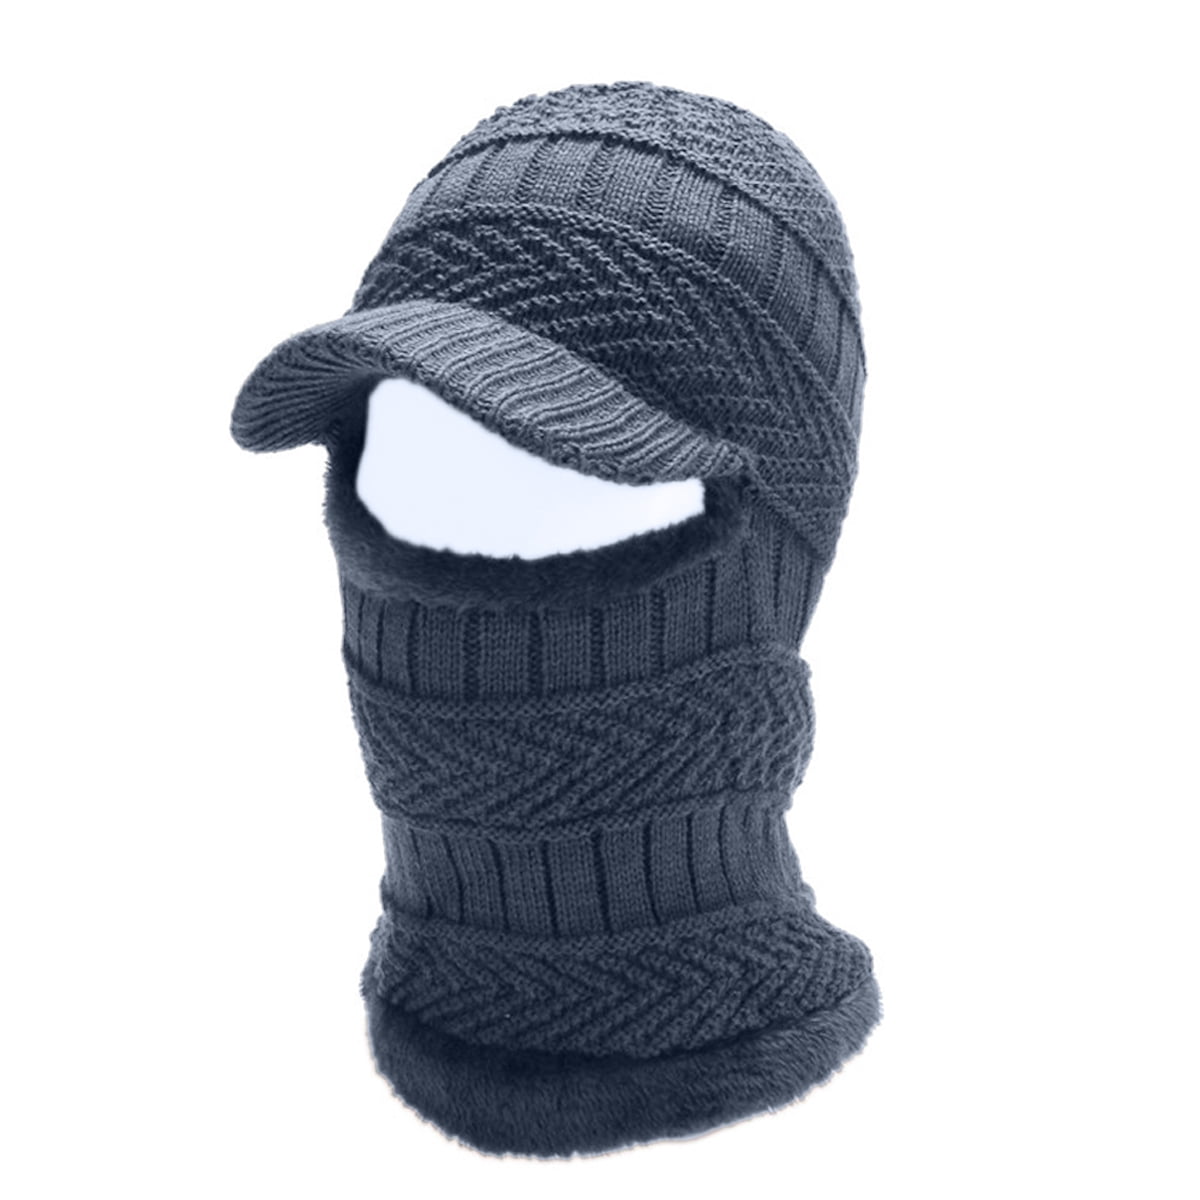 Mask Weather,Gray Face Size Winter Cycling Knitted Warm Beanie - Full Balaclava Hat Mask Cold Windproof Ski Universal